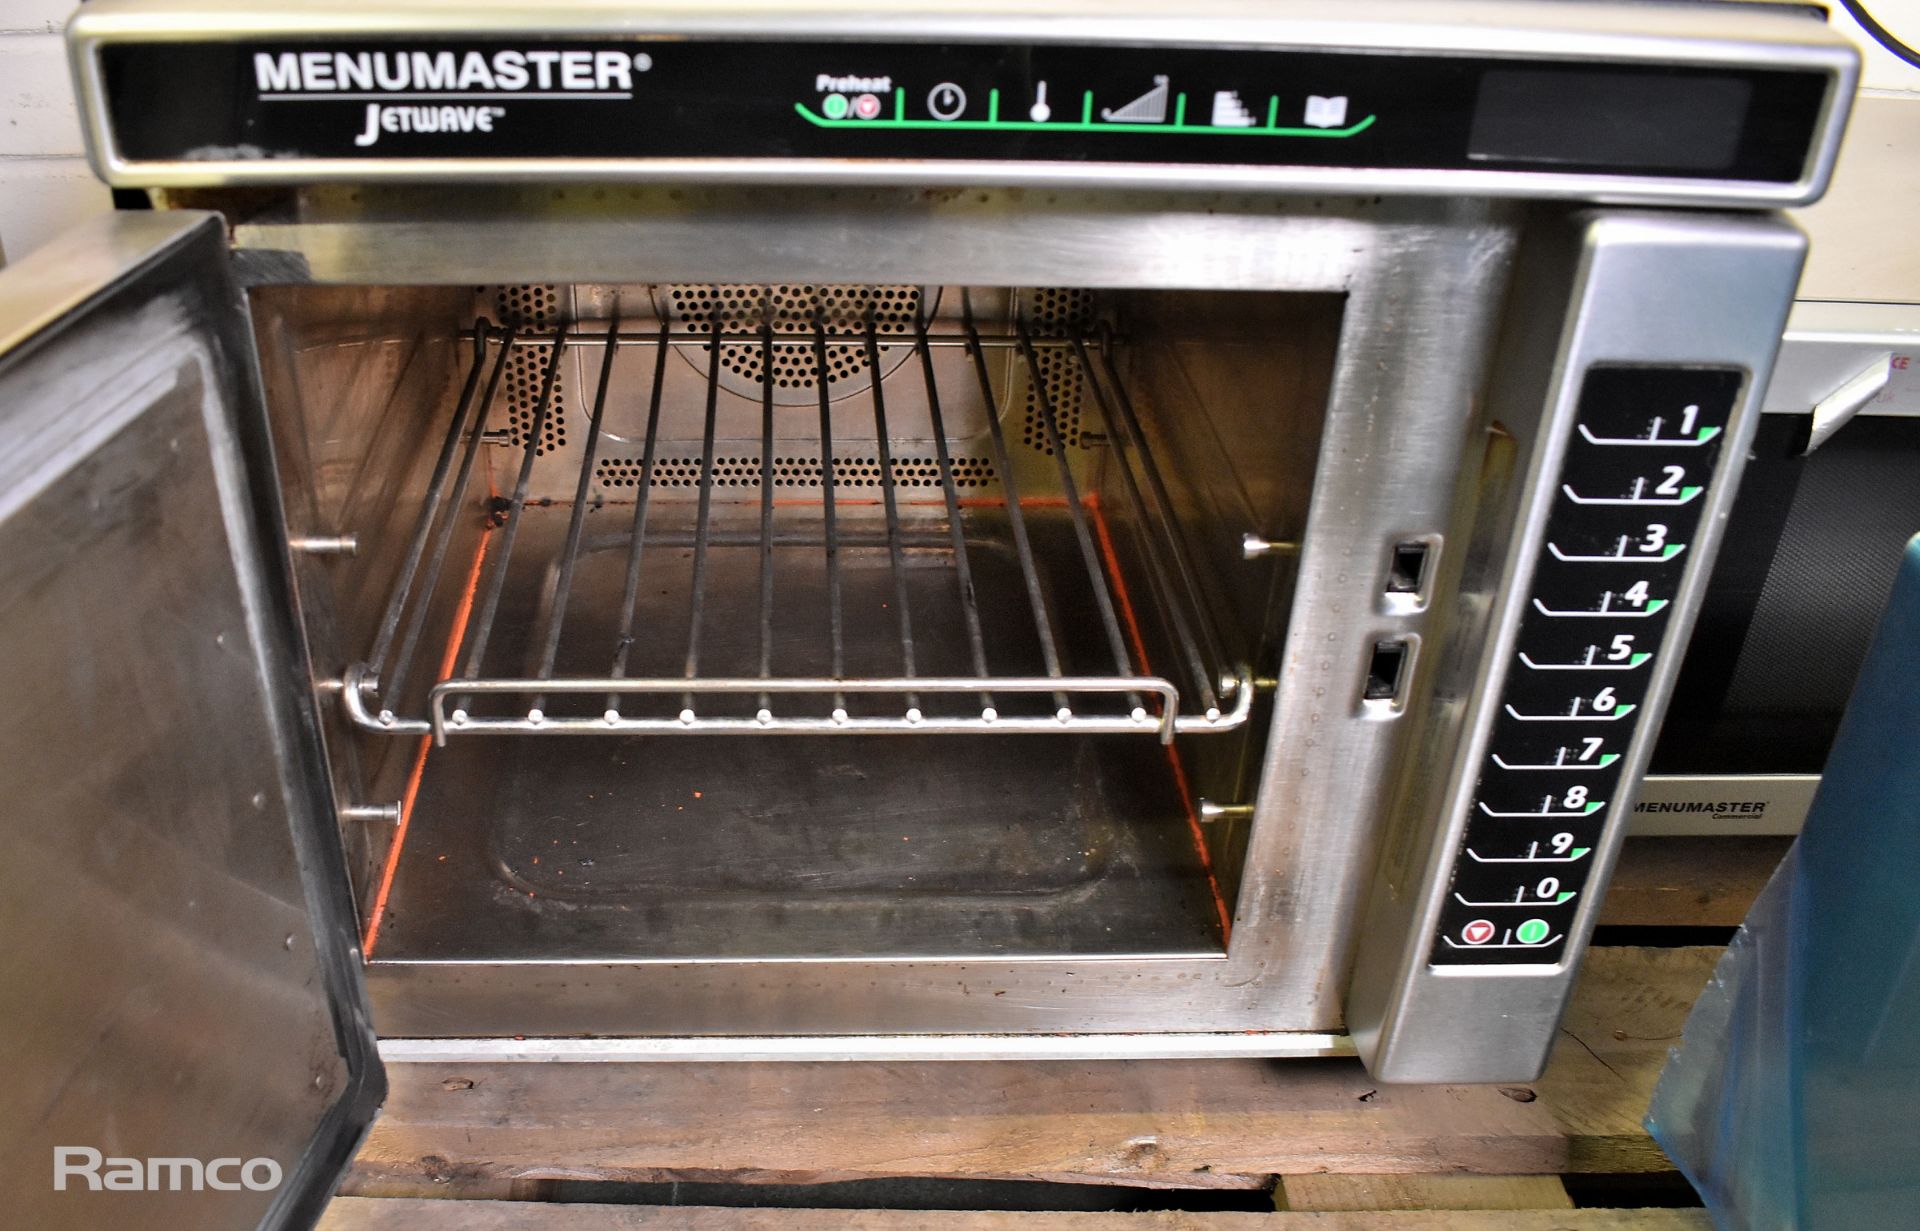 Menumaster UCA1400 Jetwave Commercial Microwave Combi Oven - Image 2 of 4